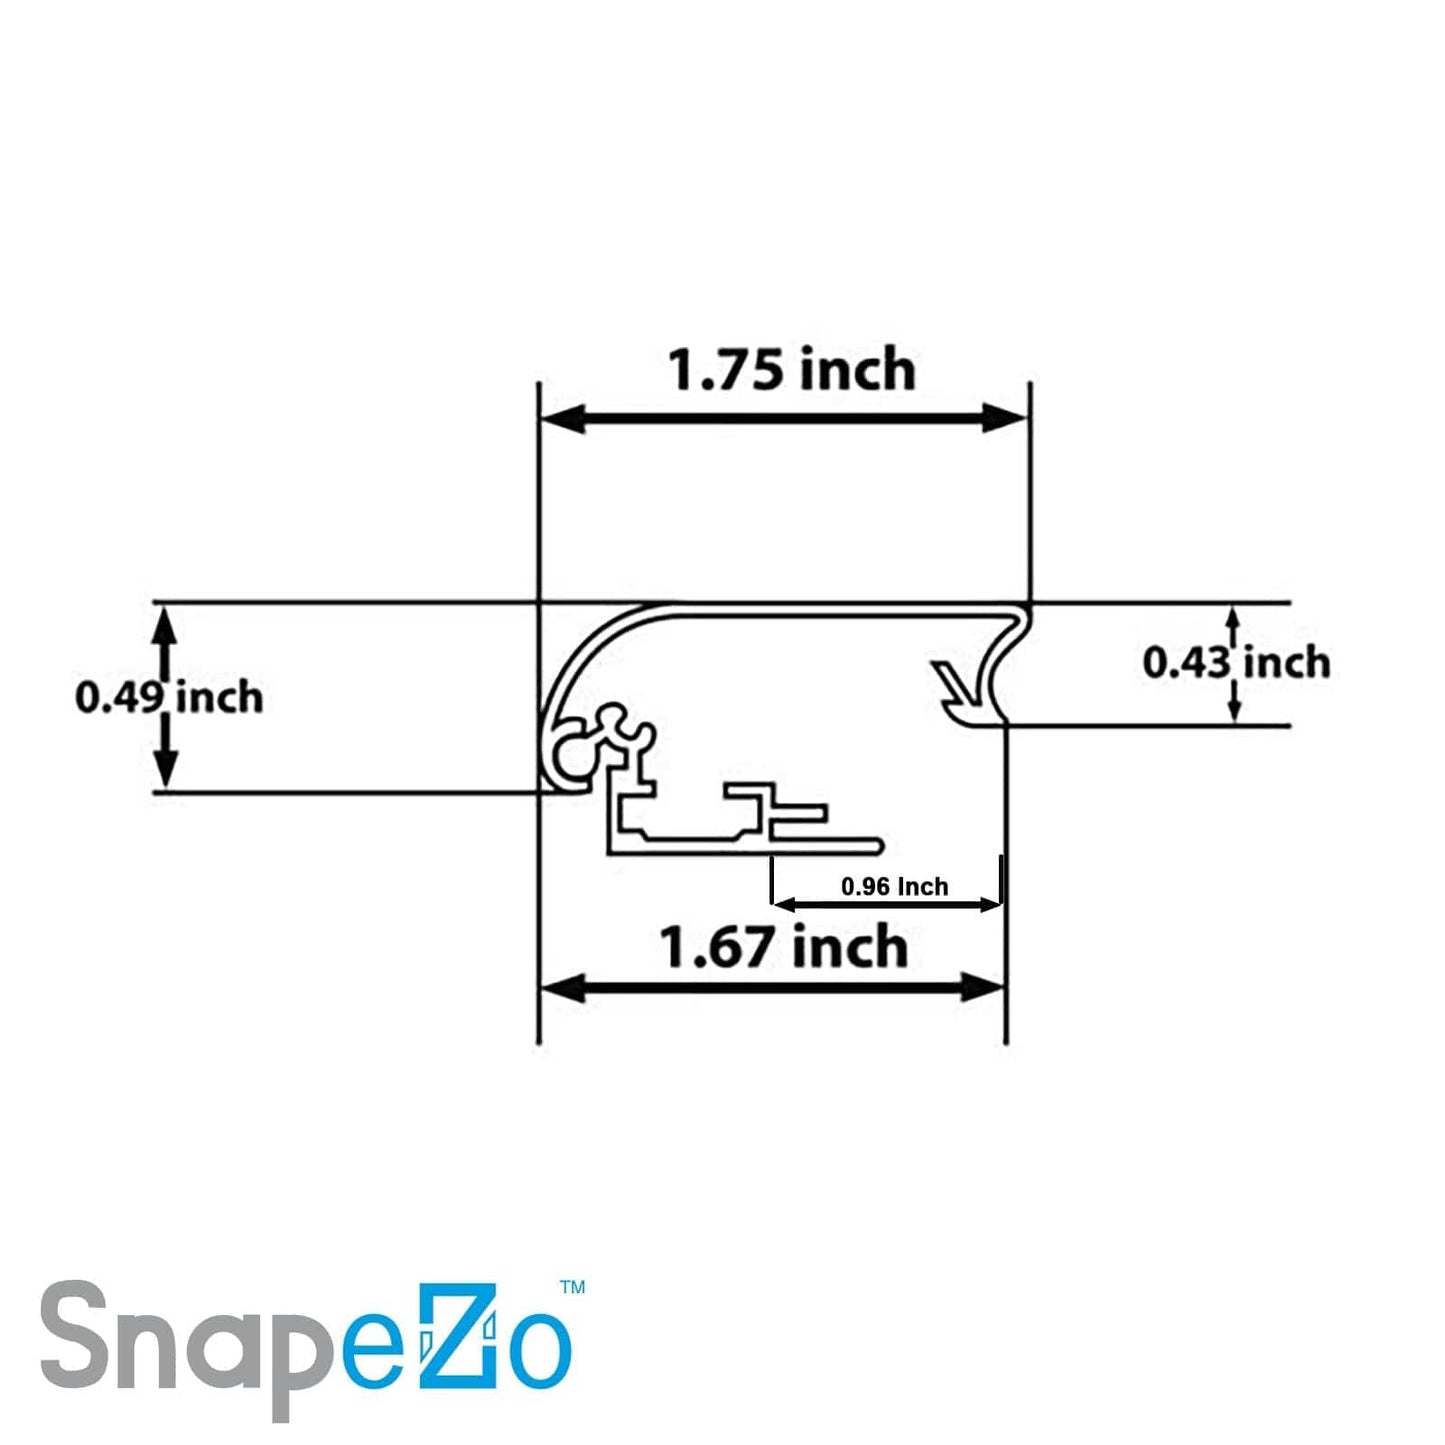 34x44 Silver SnapeZo® Snap Frame - 1.7" Profile - Snap Frames Direct